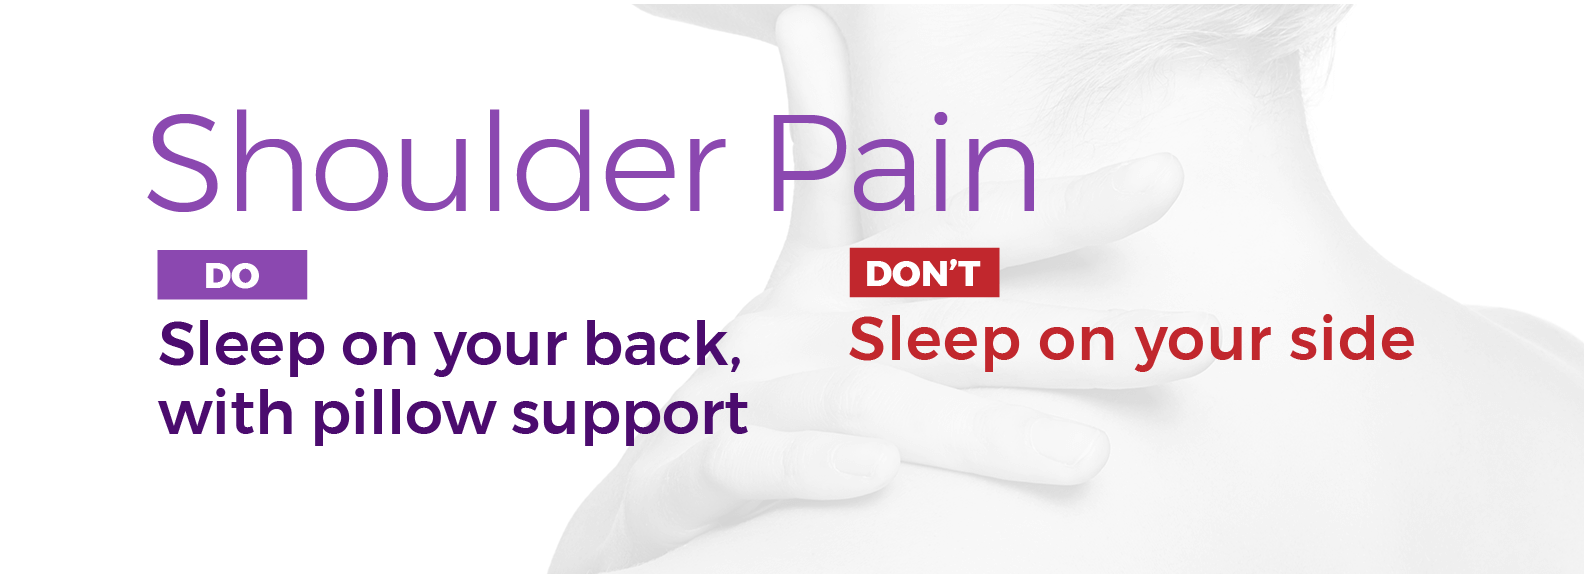 Back Sleeper Guide: Dr. Tips & Benefits - Purple